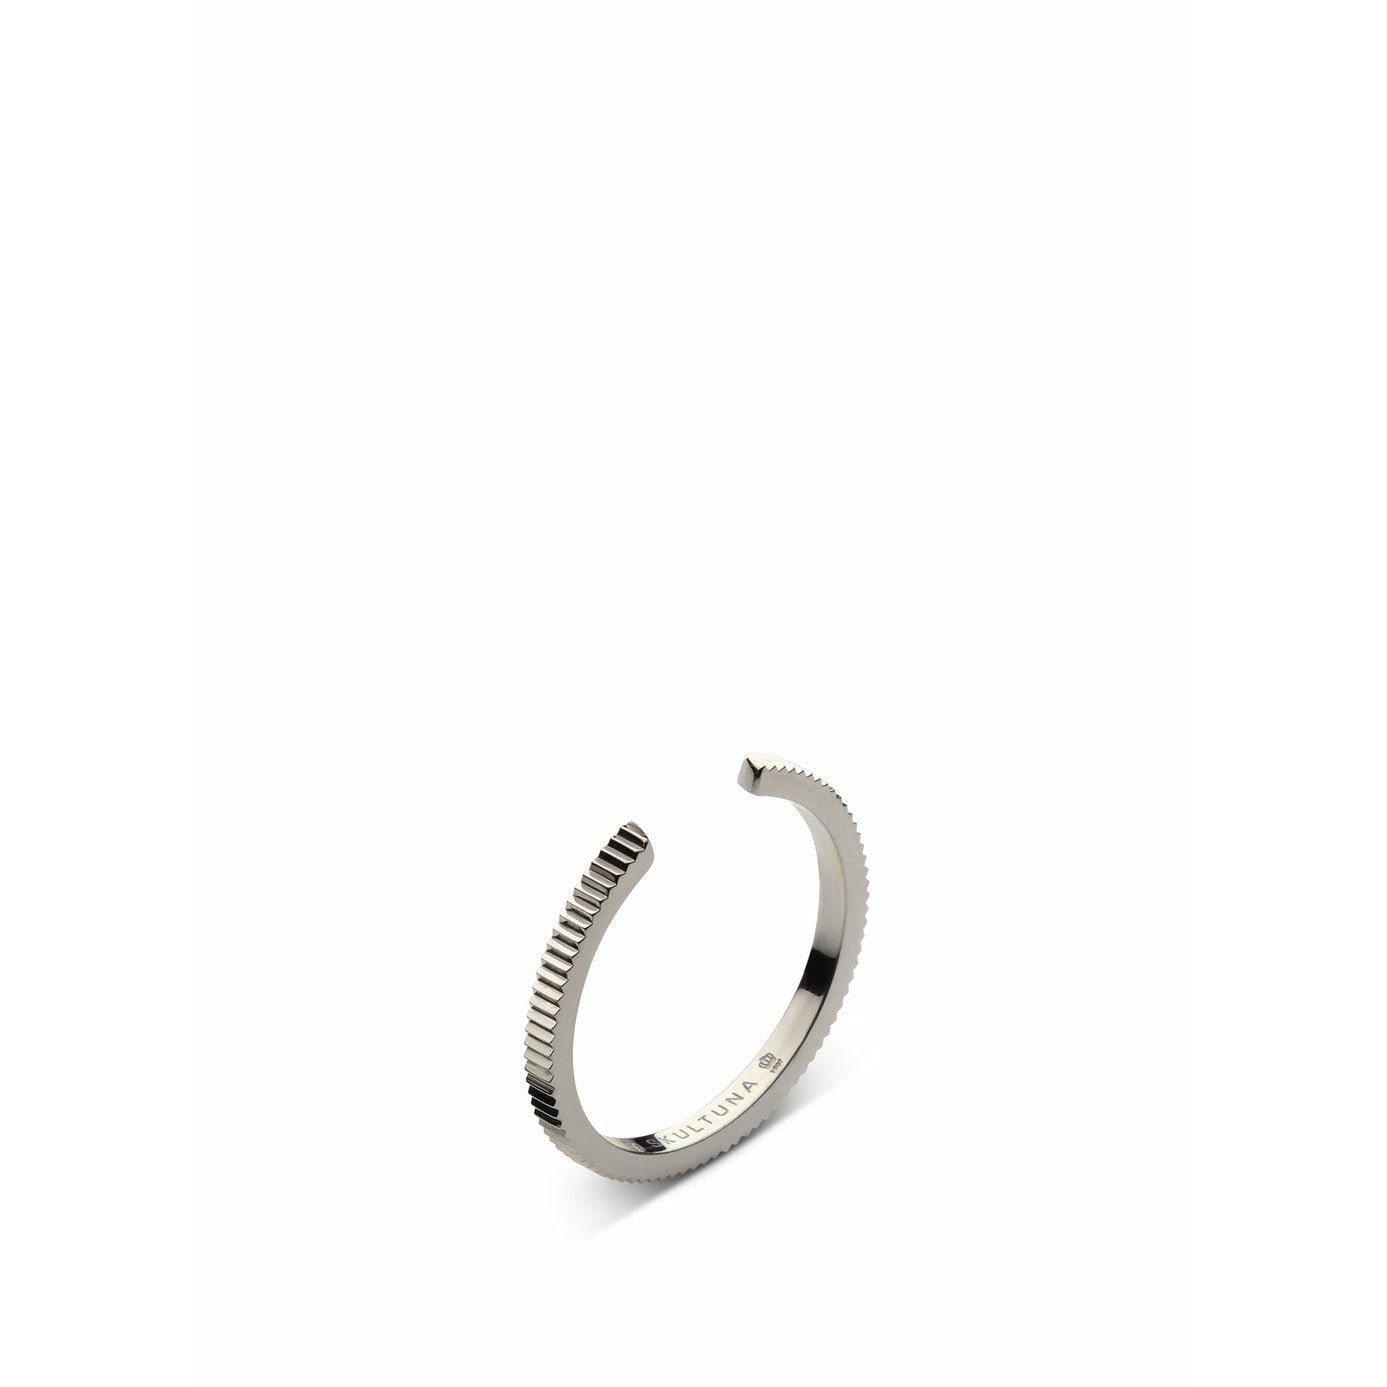 Skultuna gerippter dünner Ring mittelgroßen Stahl Ø1,73 cm